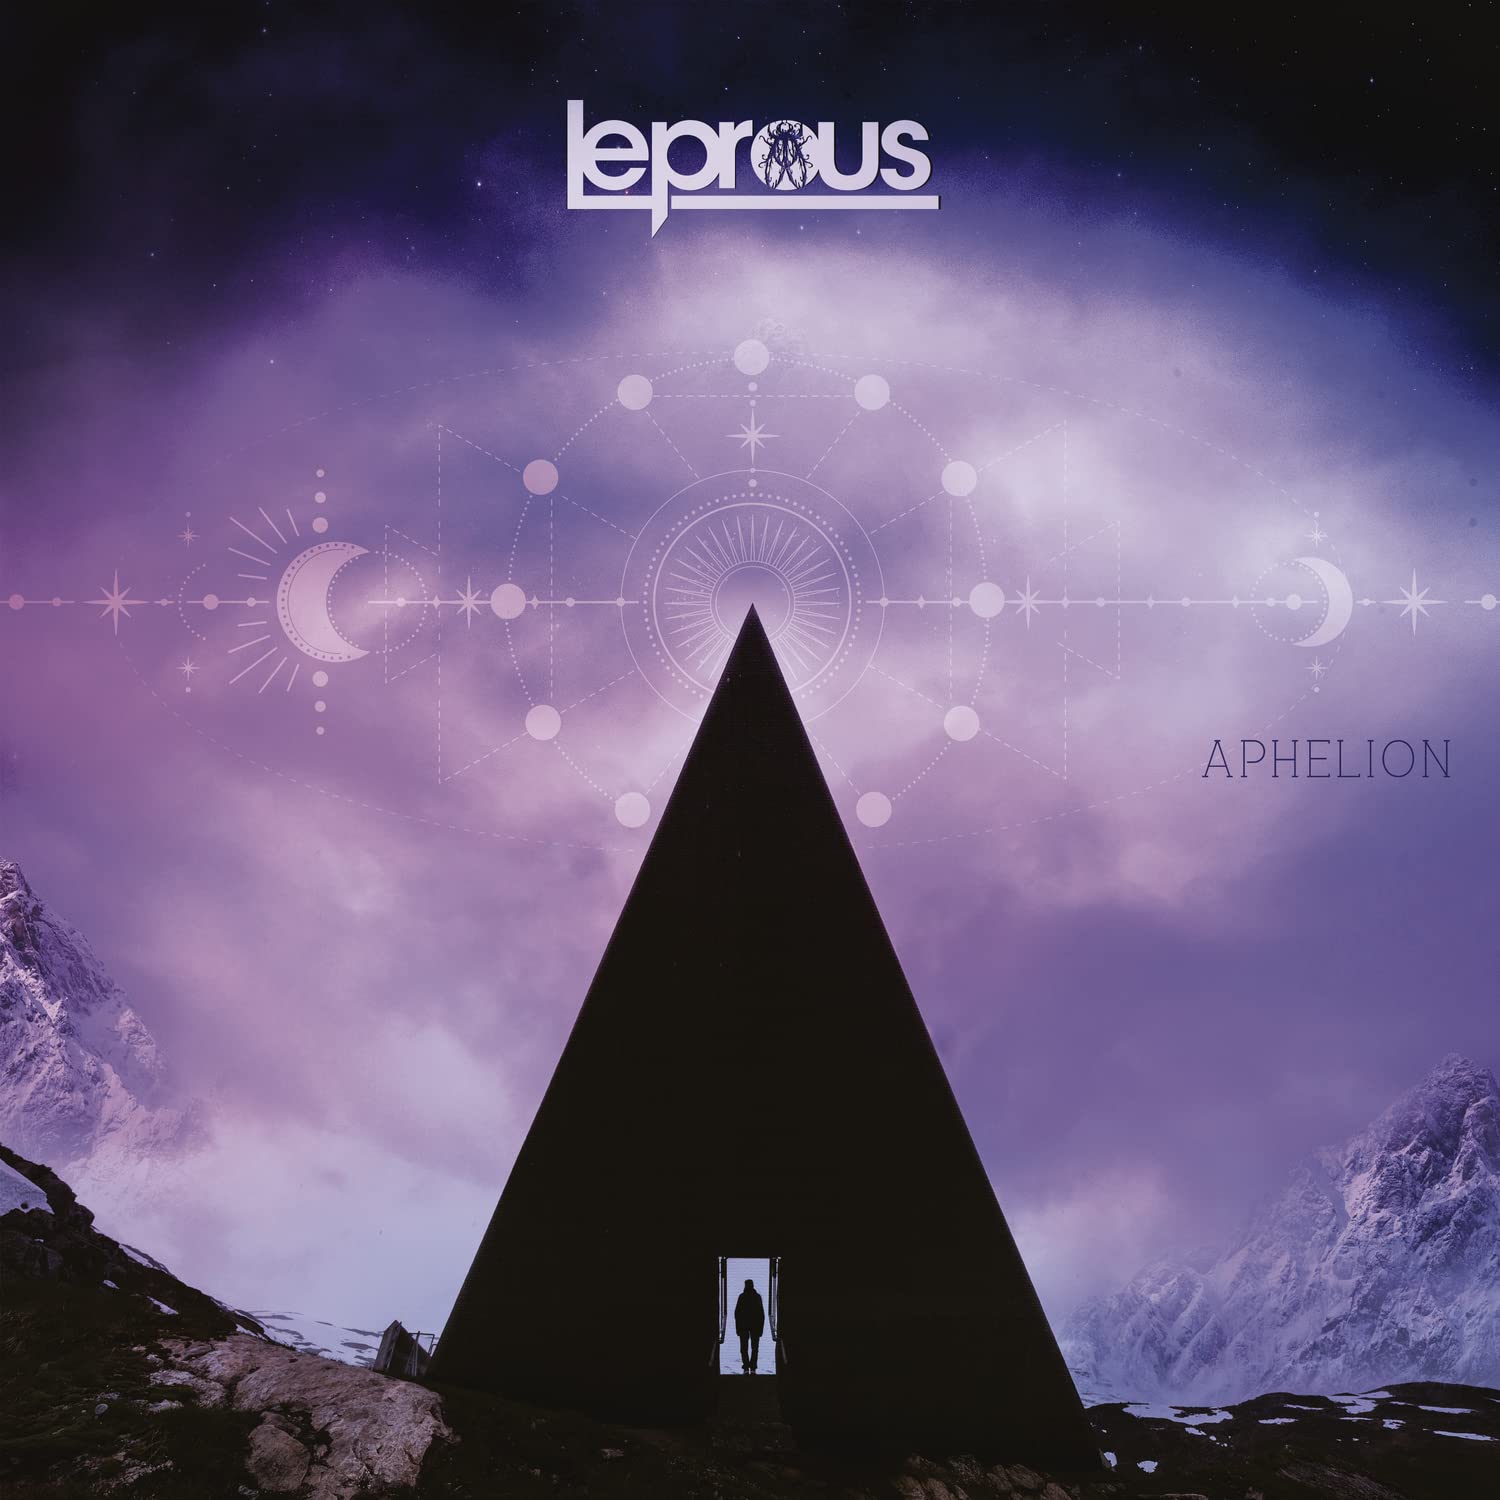 Leprous - Aphelion (Special Tour Ed. 2CD digipak) - CD - New